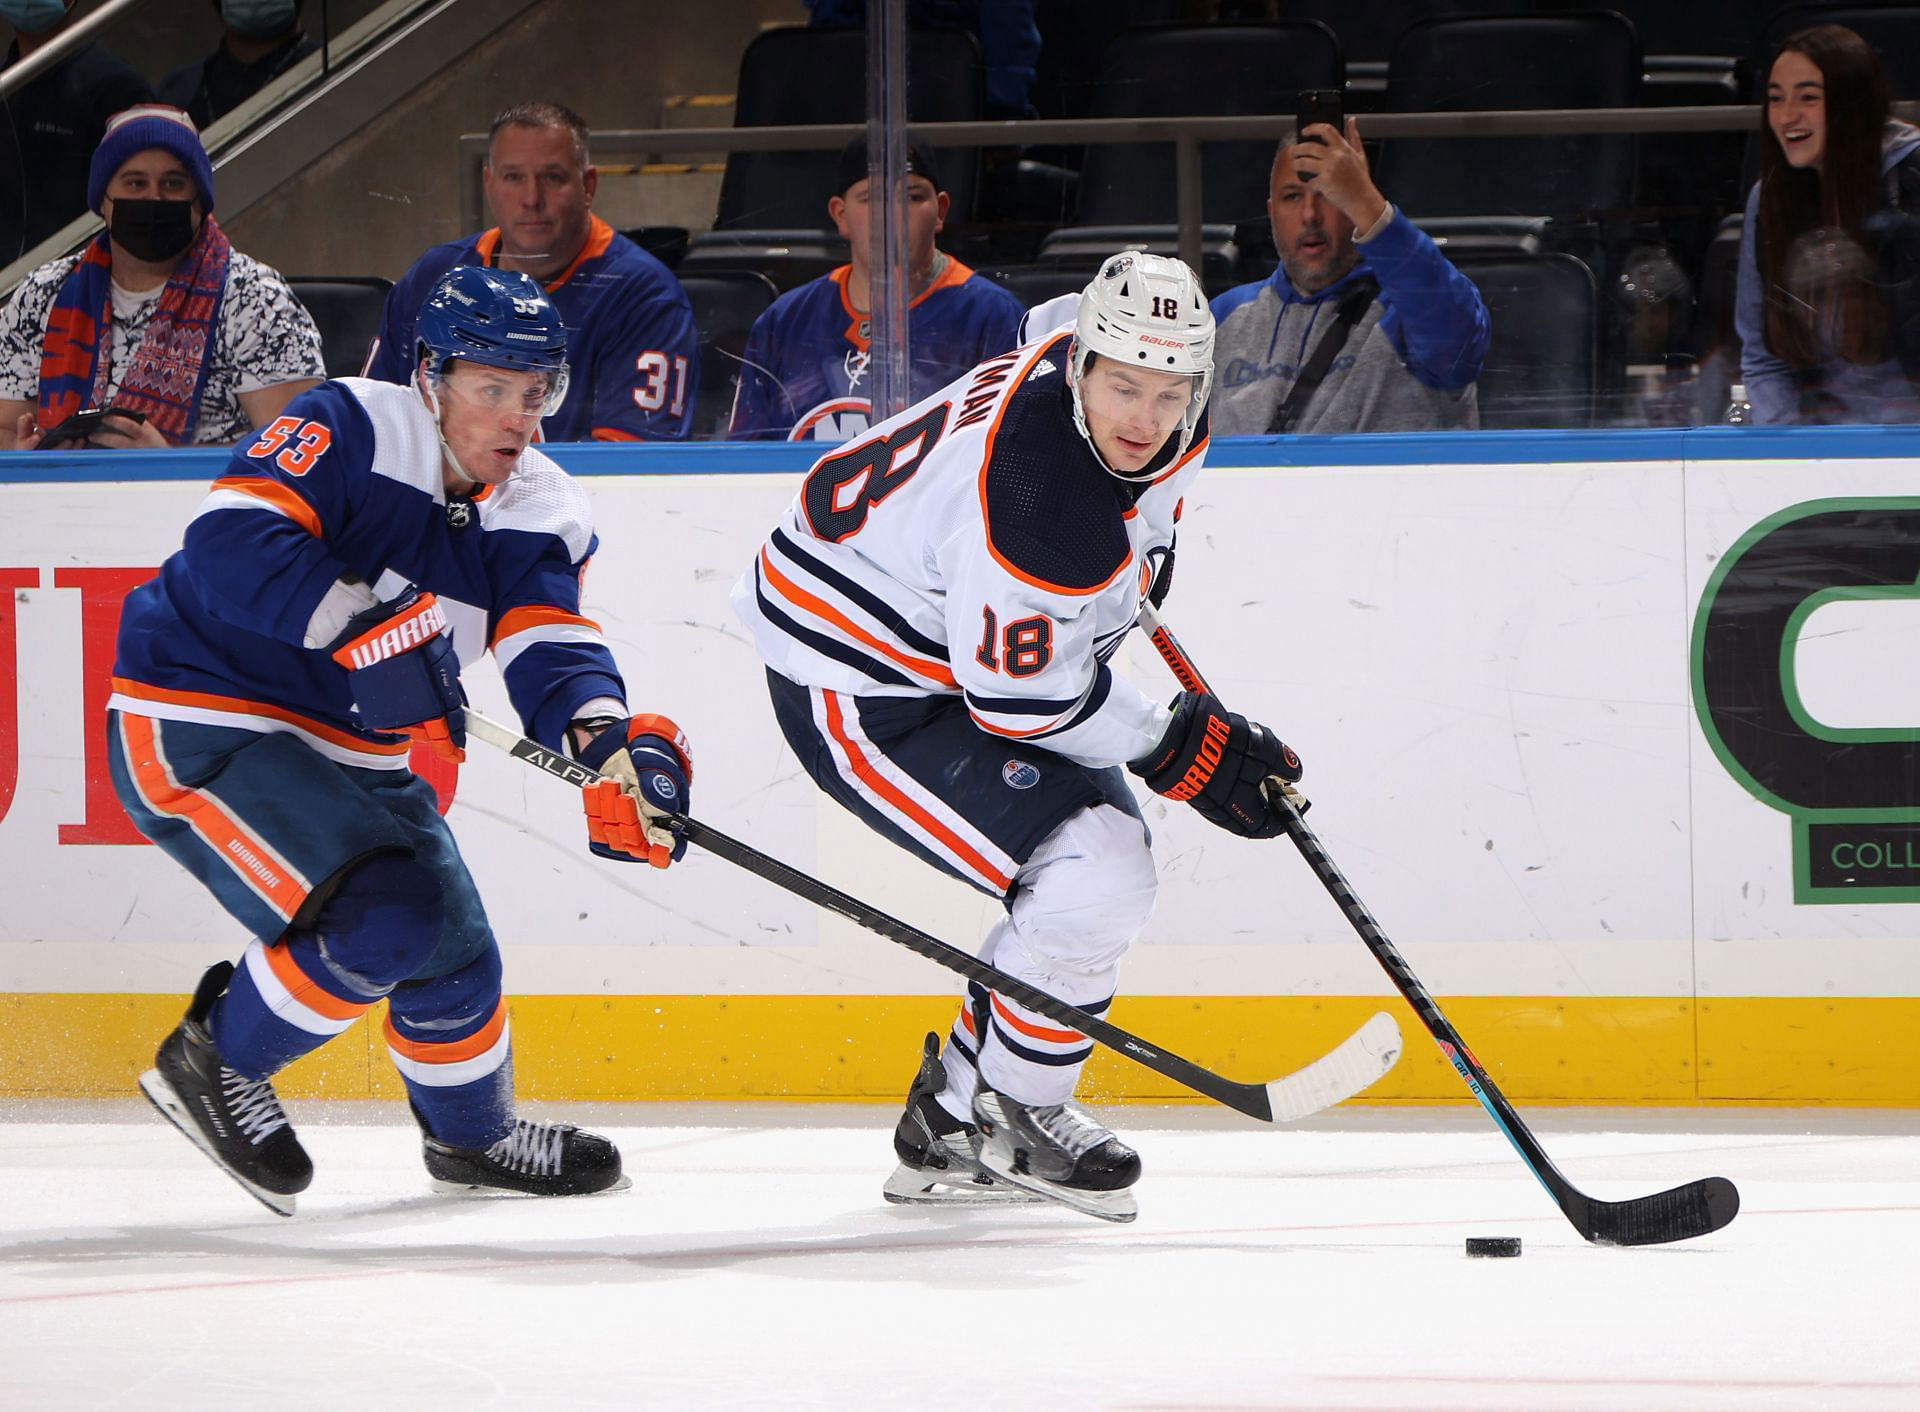 New York Islanders vs Edmonton Oilers Live streaming options, where